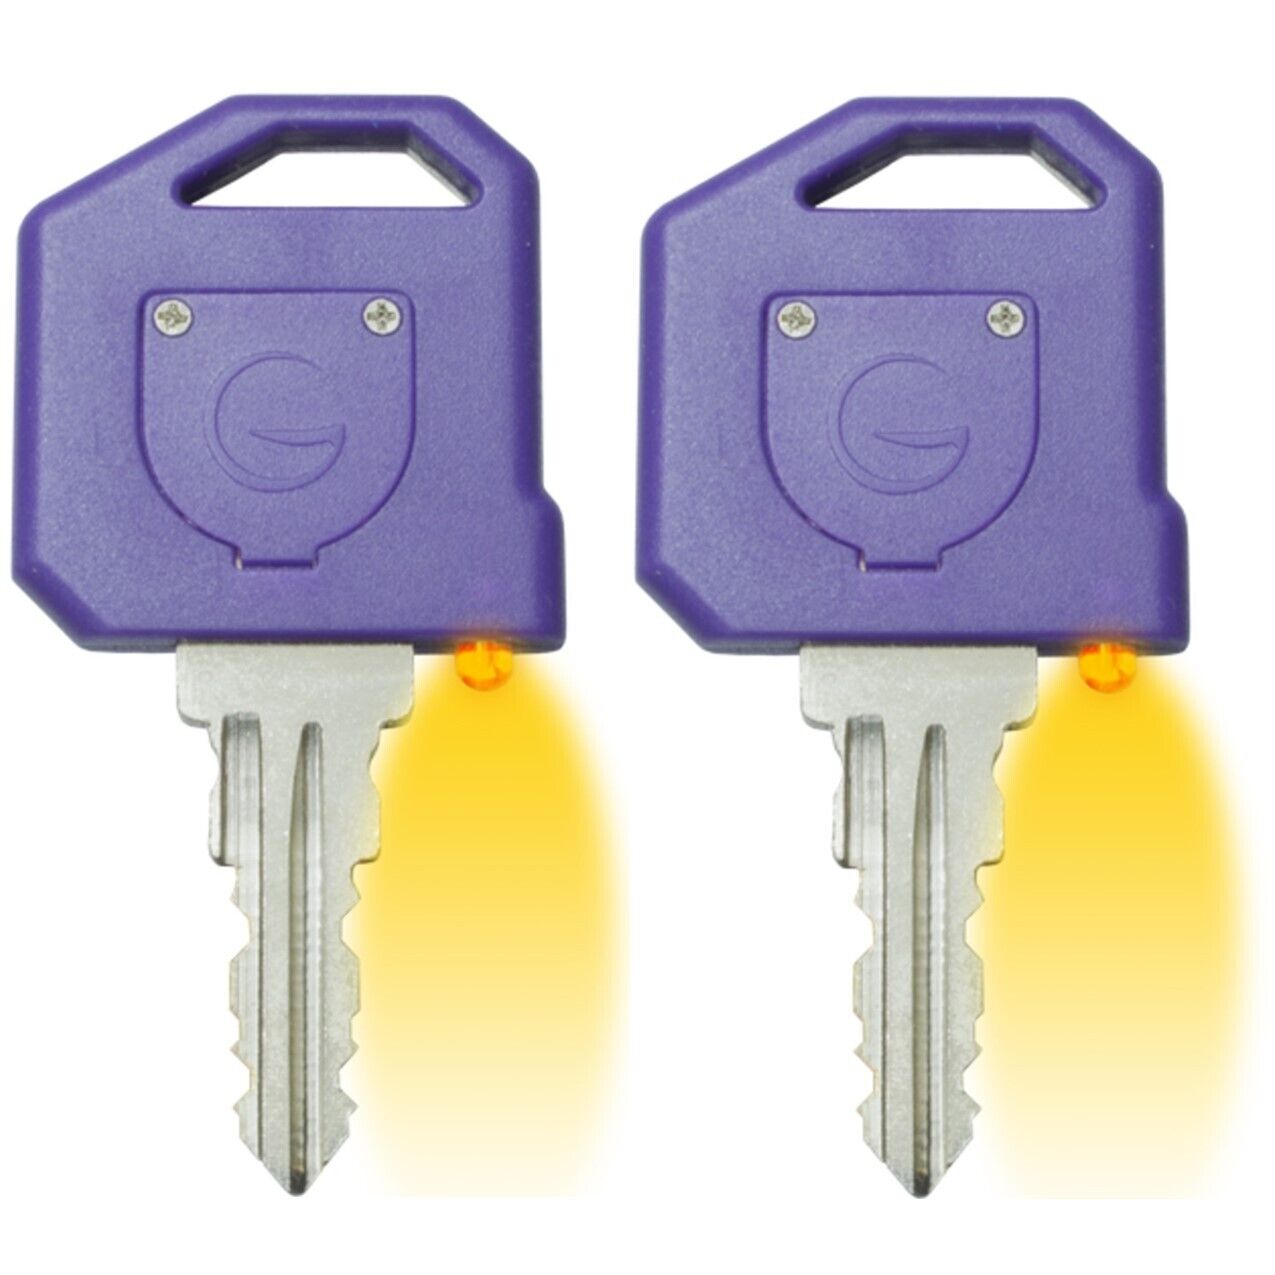 1 Pair (2 keys) Global Link LED Precut Keys G301 - G390 Select Your Key Number